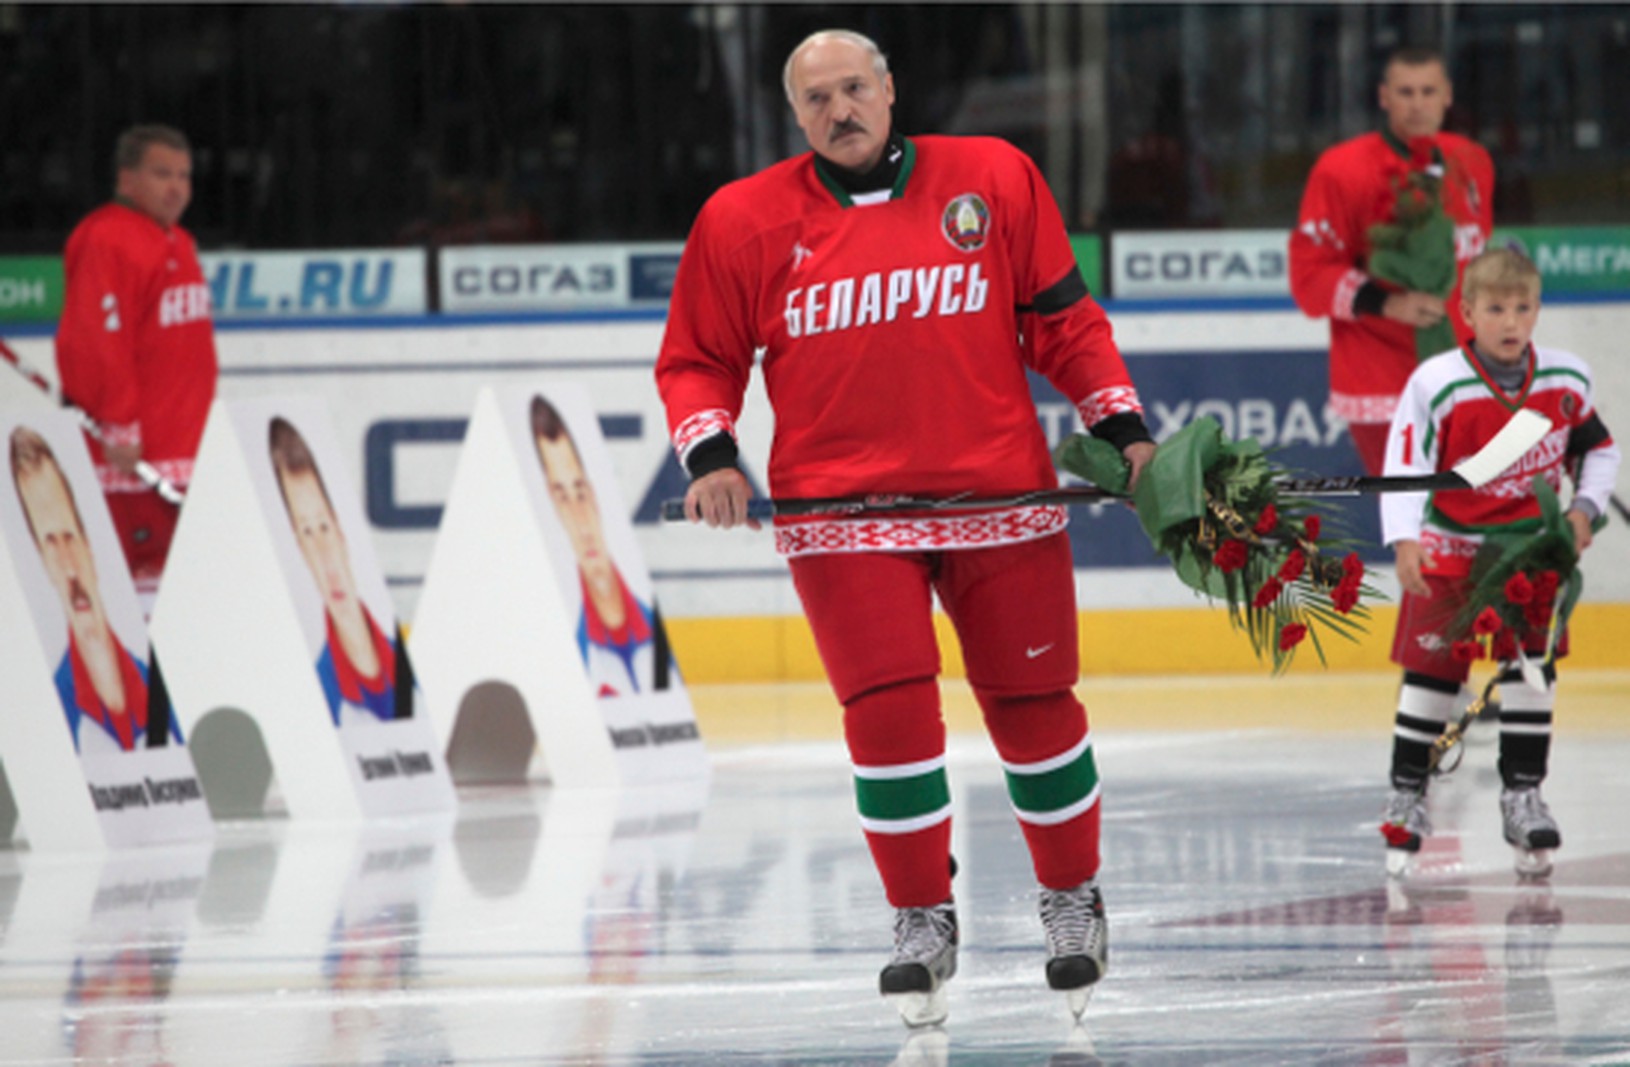 Ilustračné foto: Bieloruský prezident